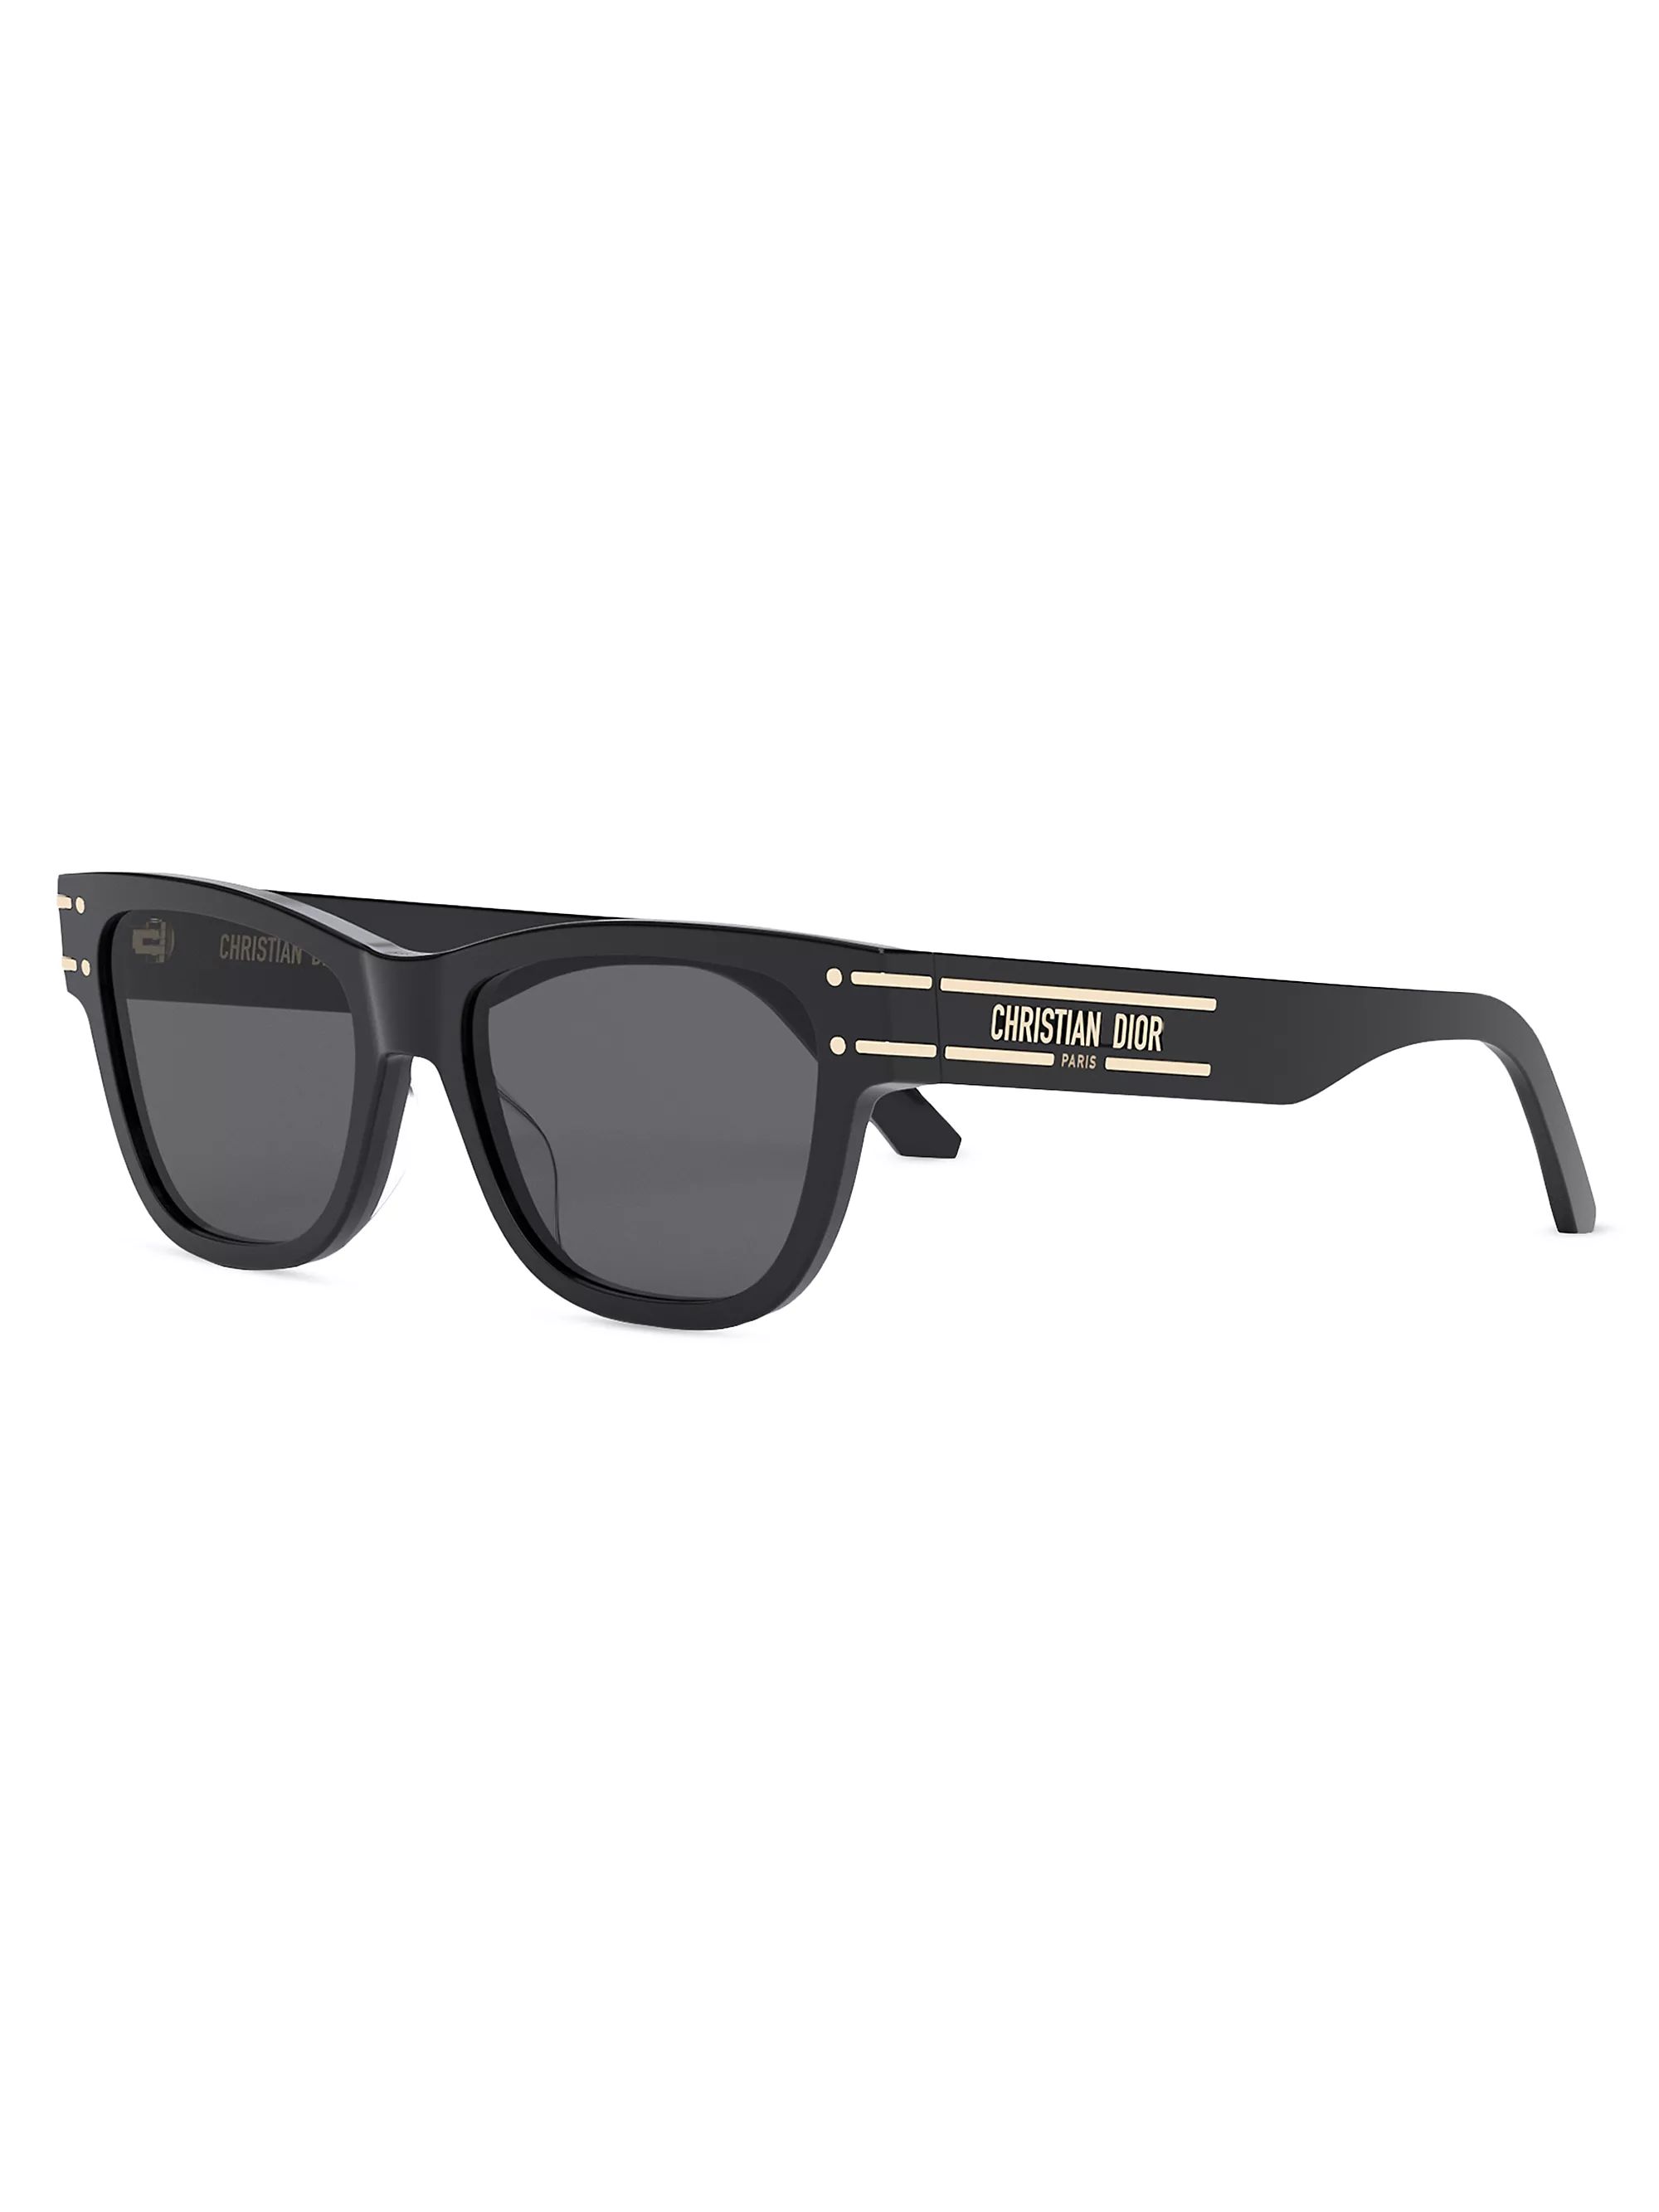 DiorSignature S6U Sunglasses | Saks Fifth Avenue